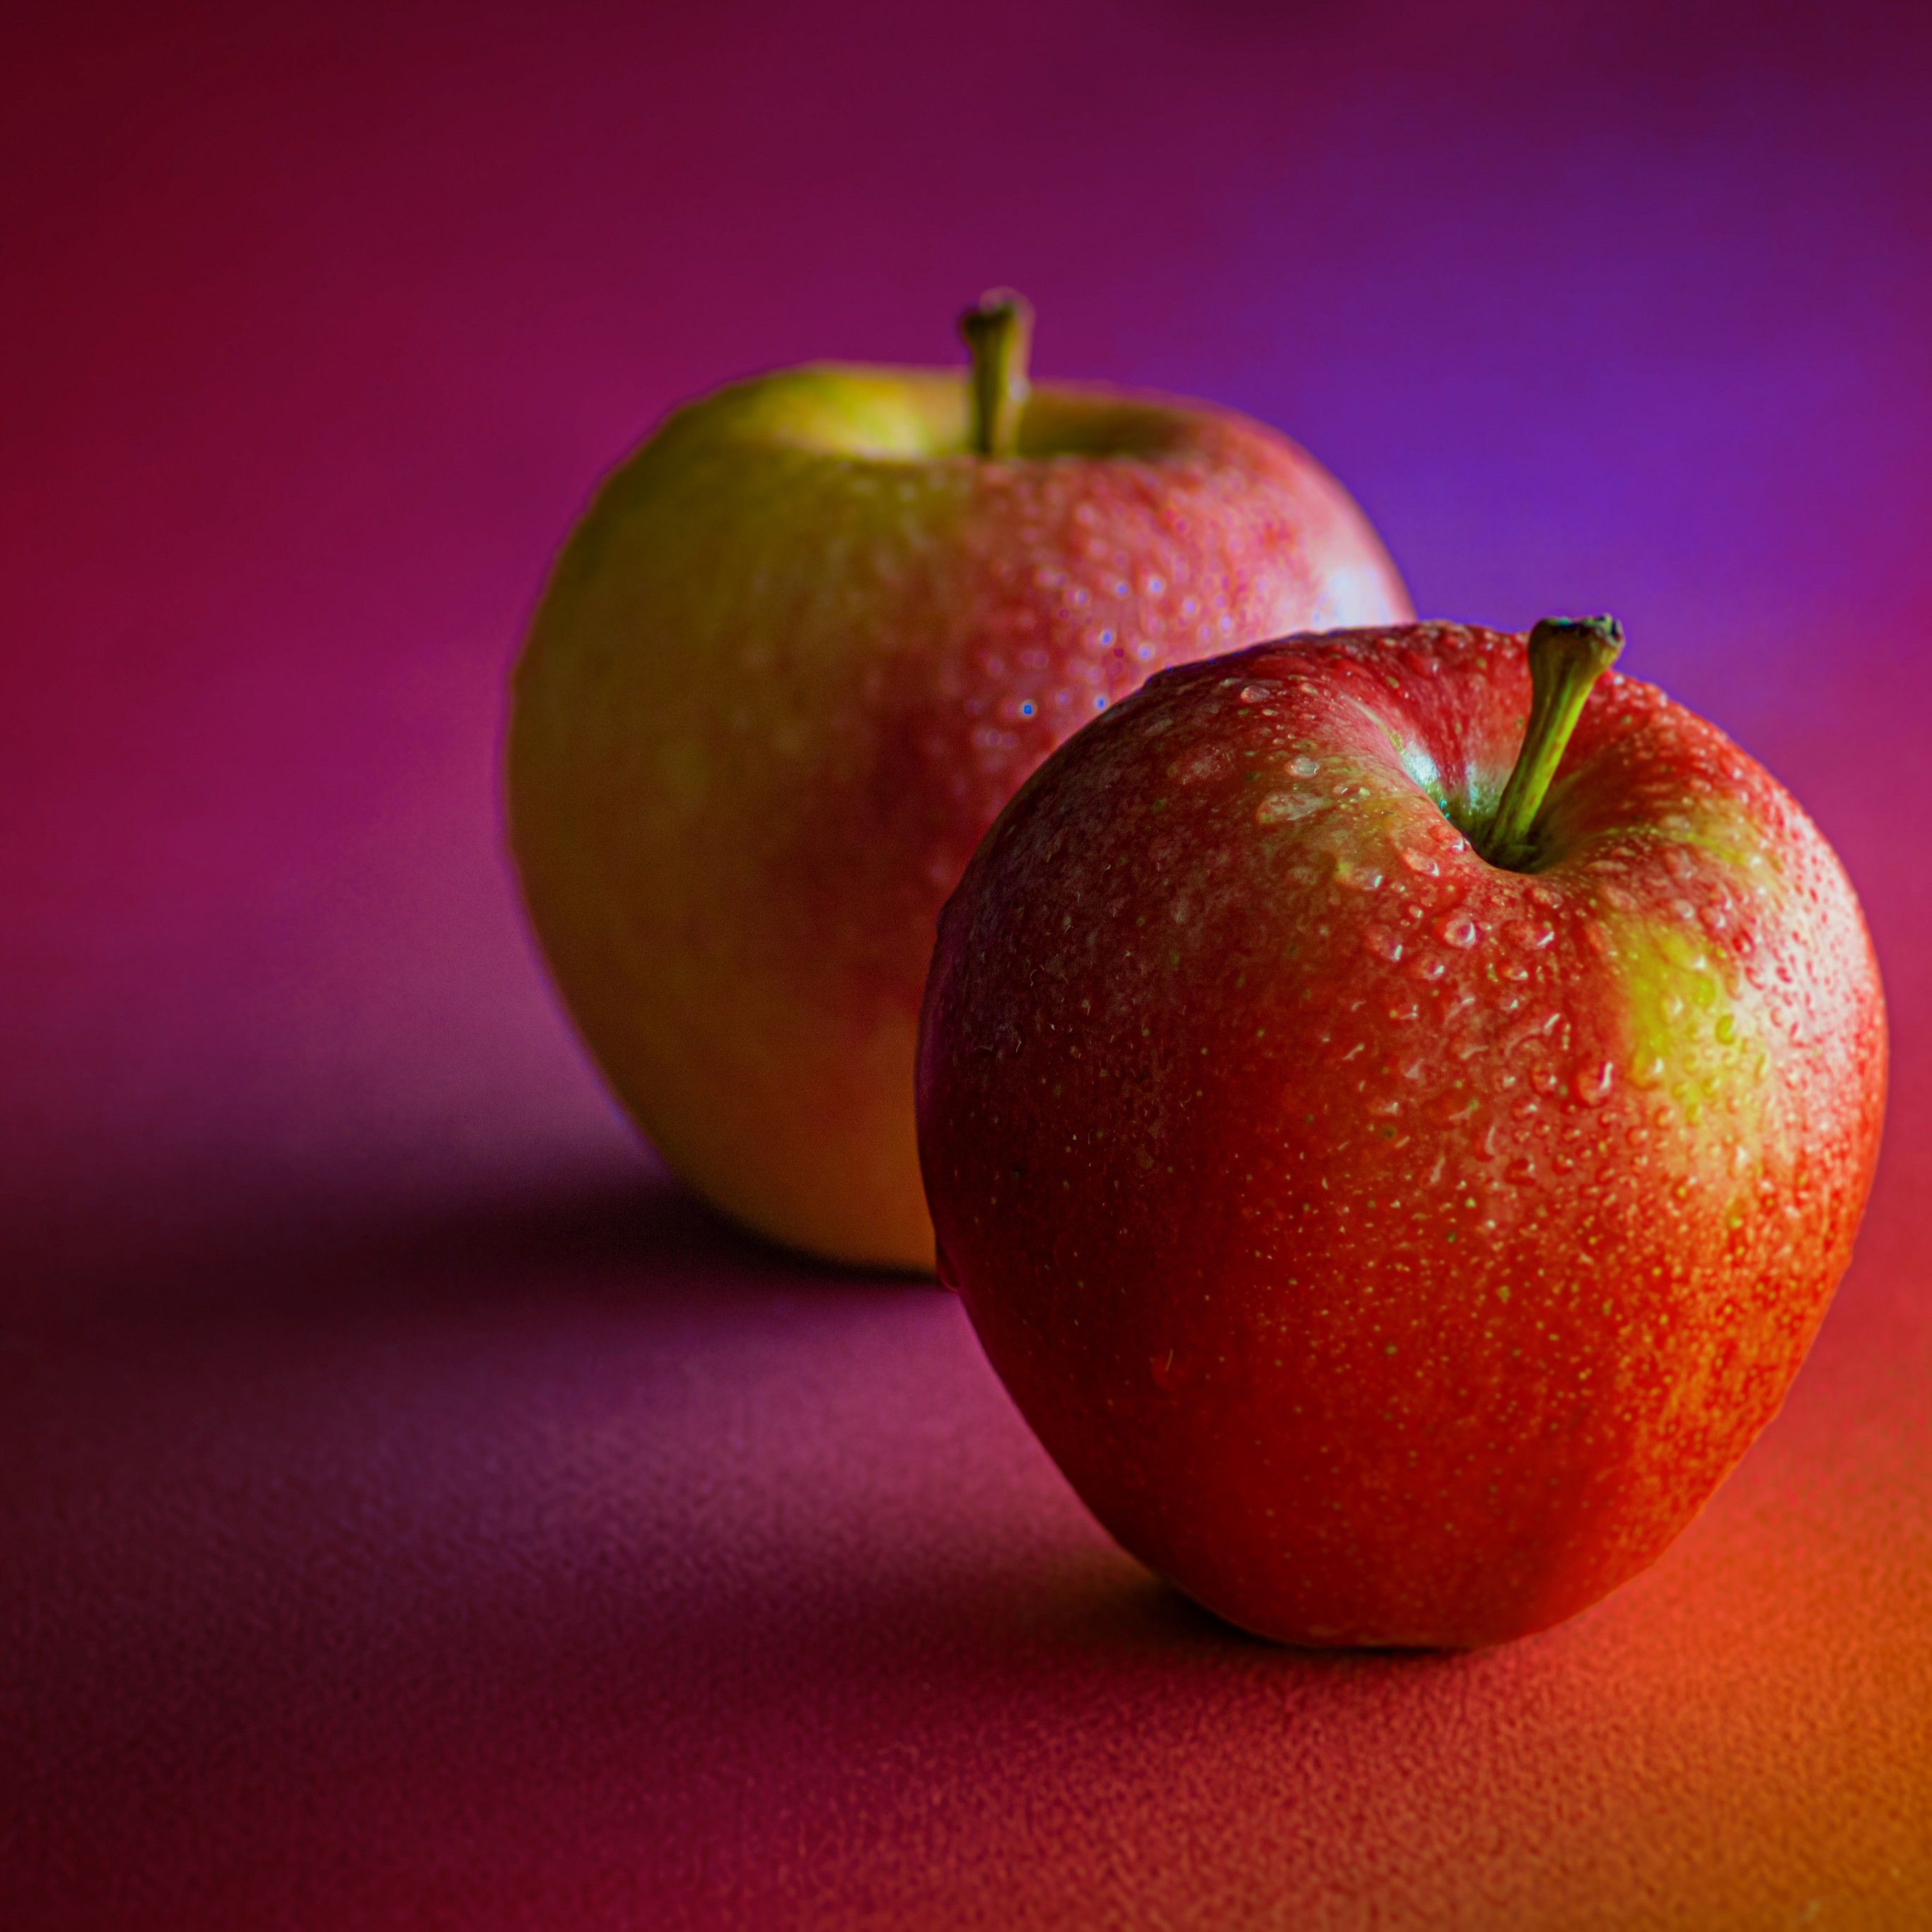 Red Apples 4K Wallpaper, Dew Drops, Water drops, Pair, Fruits, Healthy, Gradient background, 5K, Food